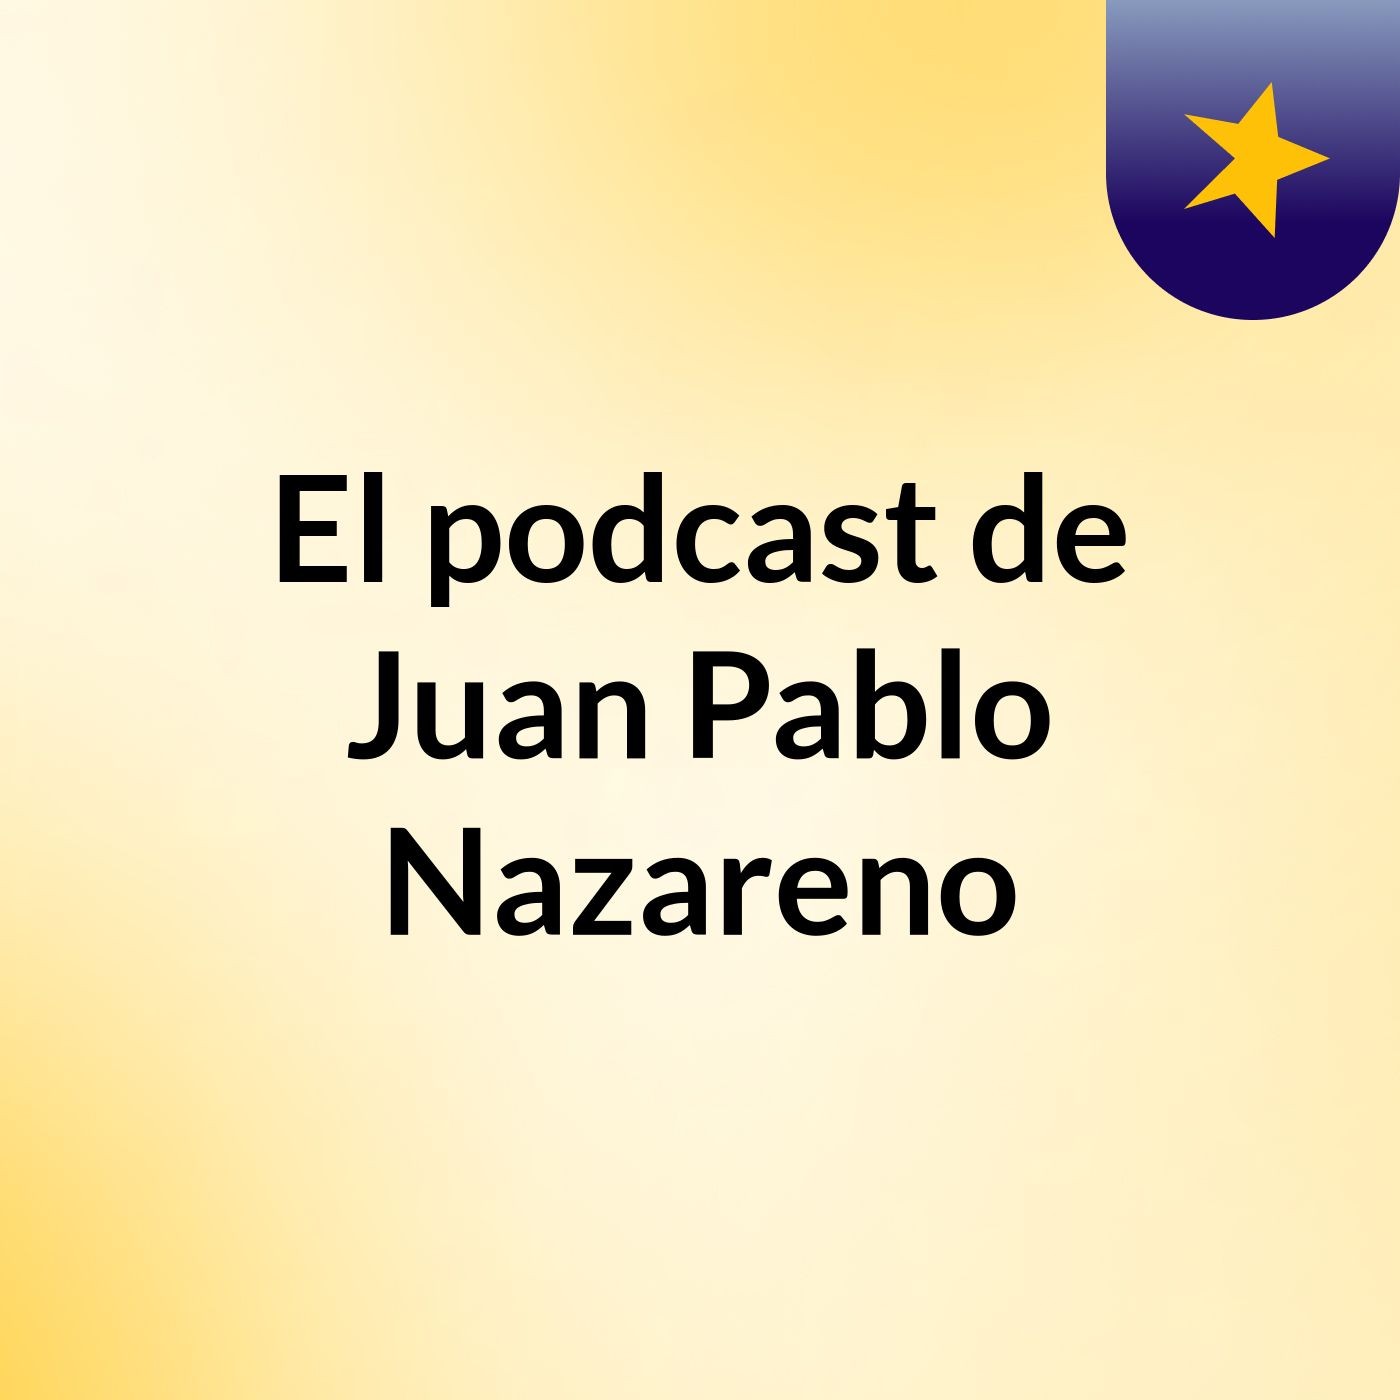 El podcast de Juan Pablo Nazareno